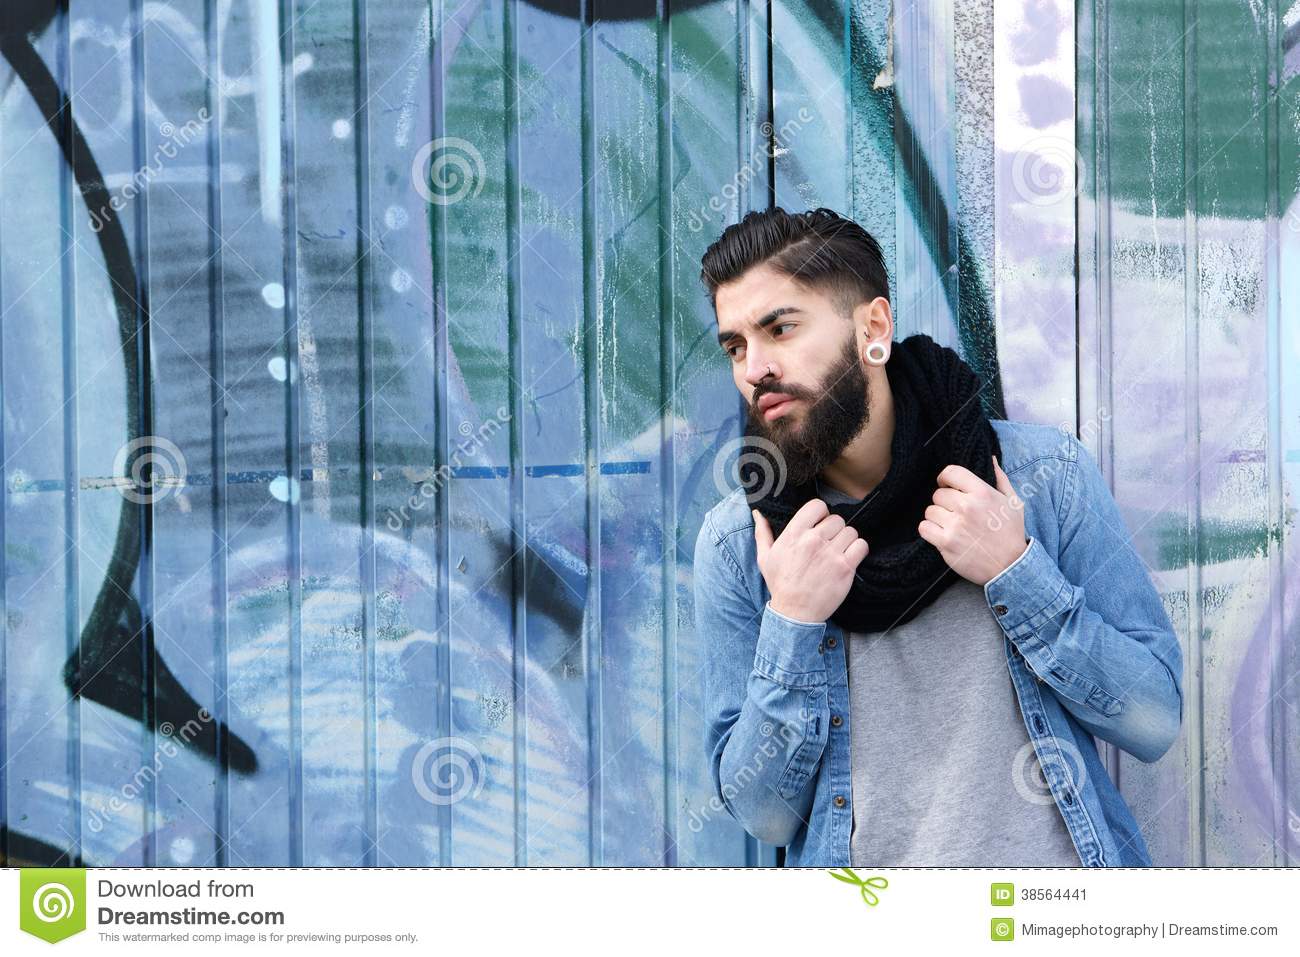 Portrait Of A Male Fashion Model With Beard Posing Against Graffiti